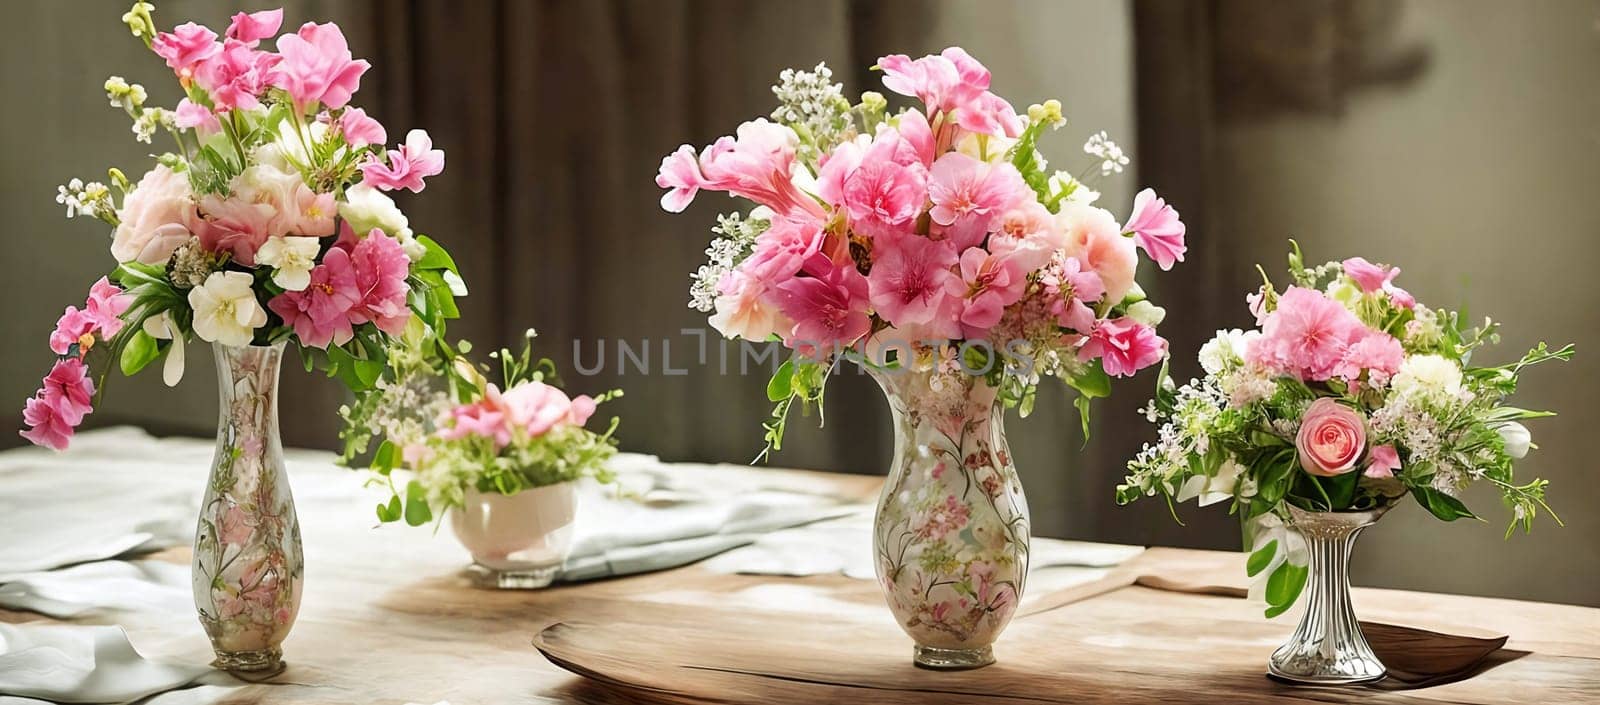 Delicate elegance of blooming flowers and vibrant floral arrangements by GoodOlga